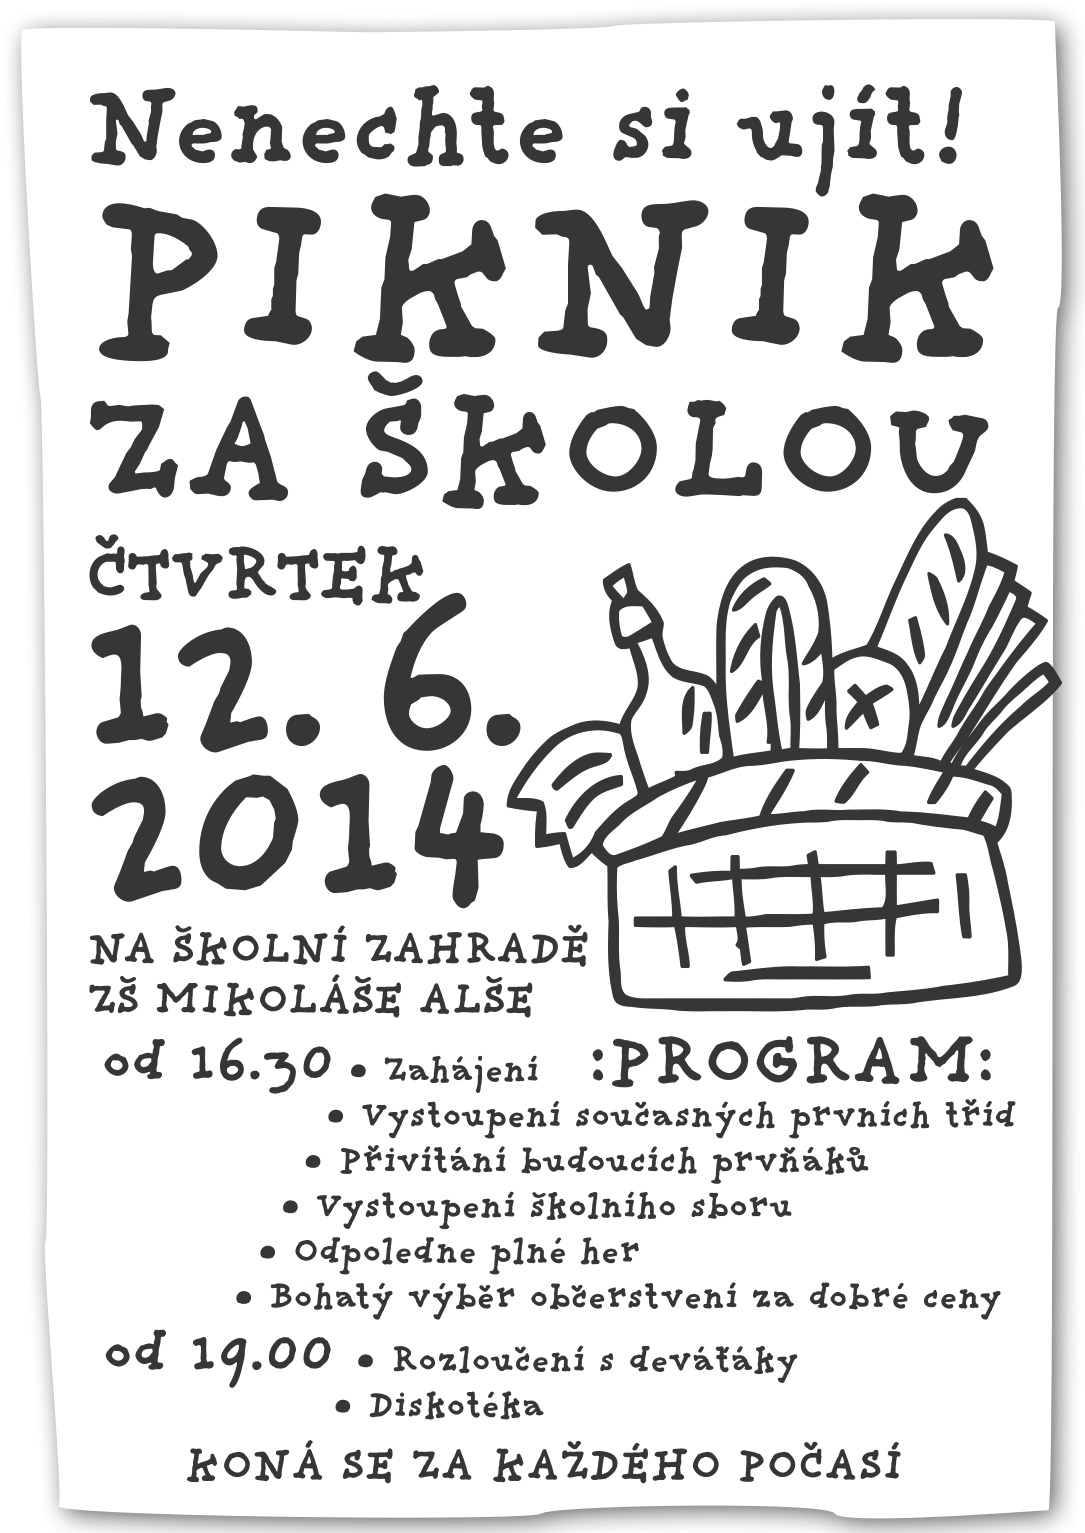 piknik za školou - 12.6.2014